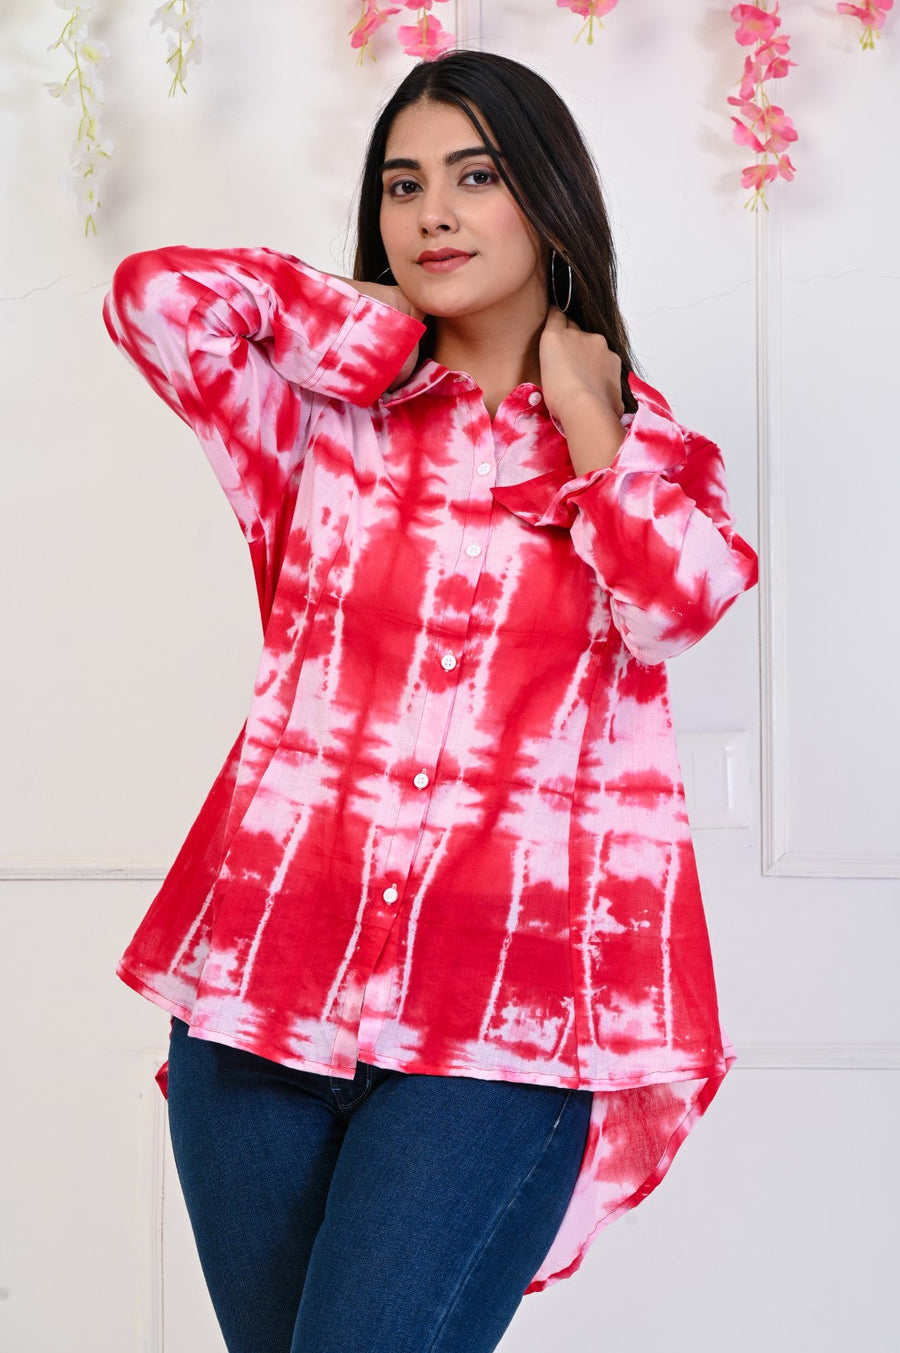 Red Tye & Dye Shirt in Indo-Western Style: Elevate Your Wardrobe